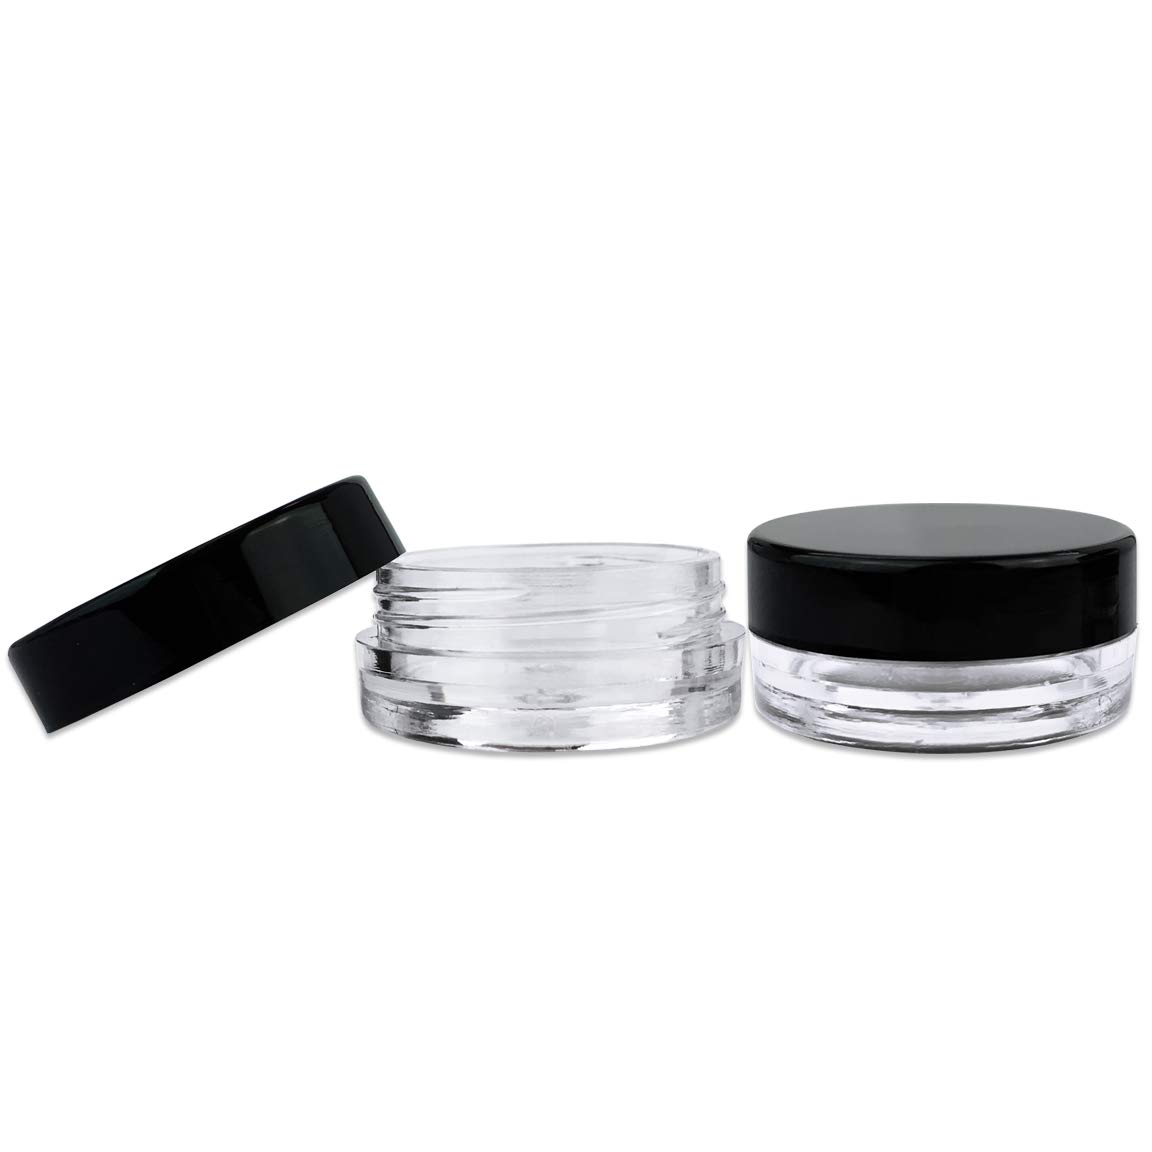 (100 Pieces Jars + Lid) Beauticom 3G/3ML Round Clear Jars with BLACK Screw Cap Lids for Scrubs, Oils, Toner, Salves, Creams, Lotions, Makeup Samples, Lip Balms - BPA Free